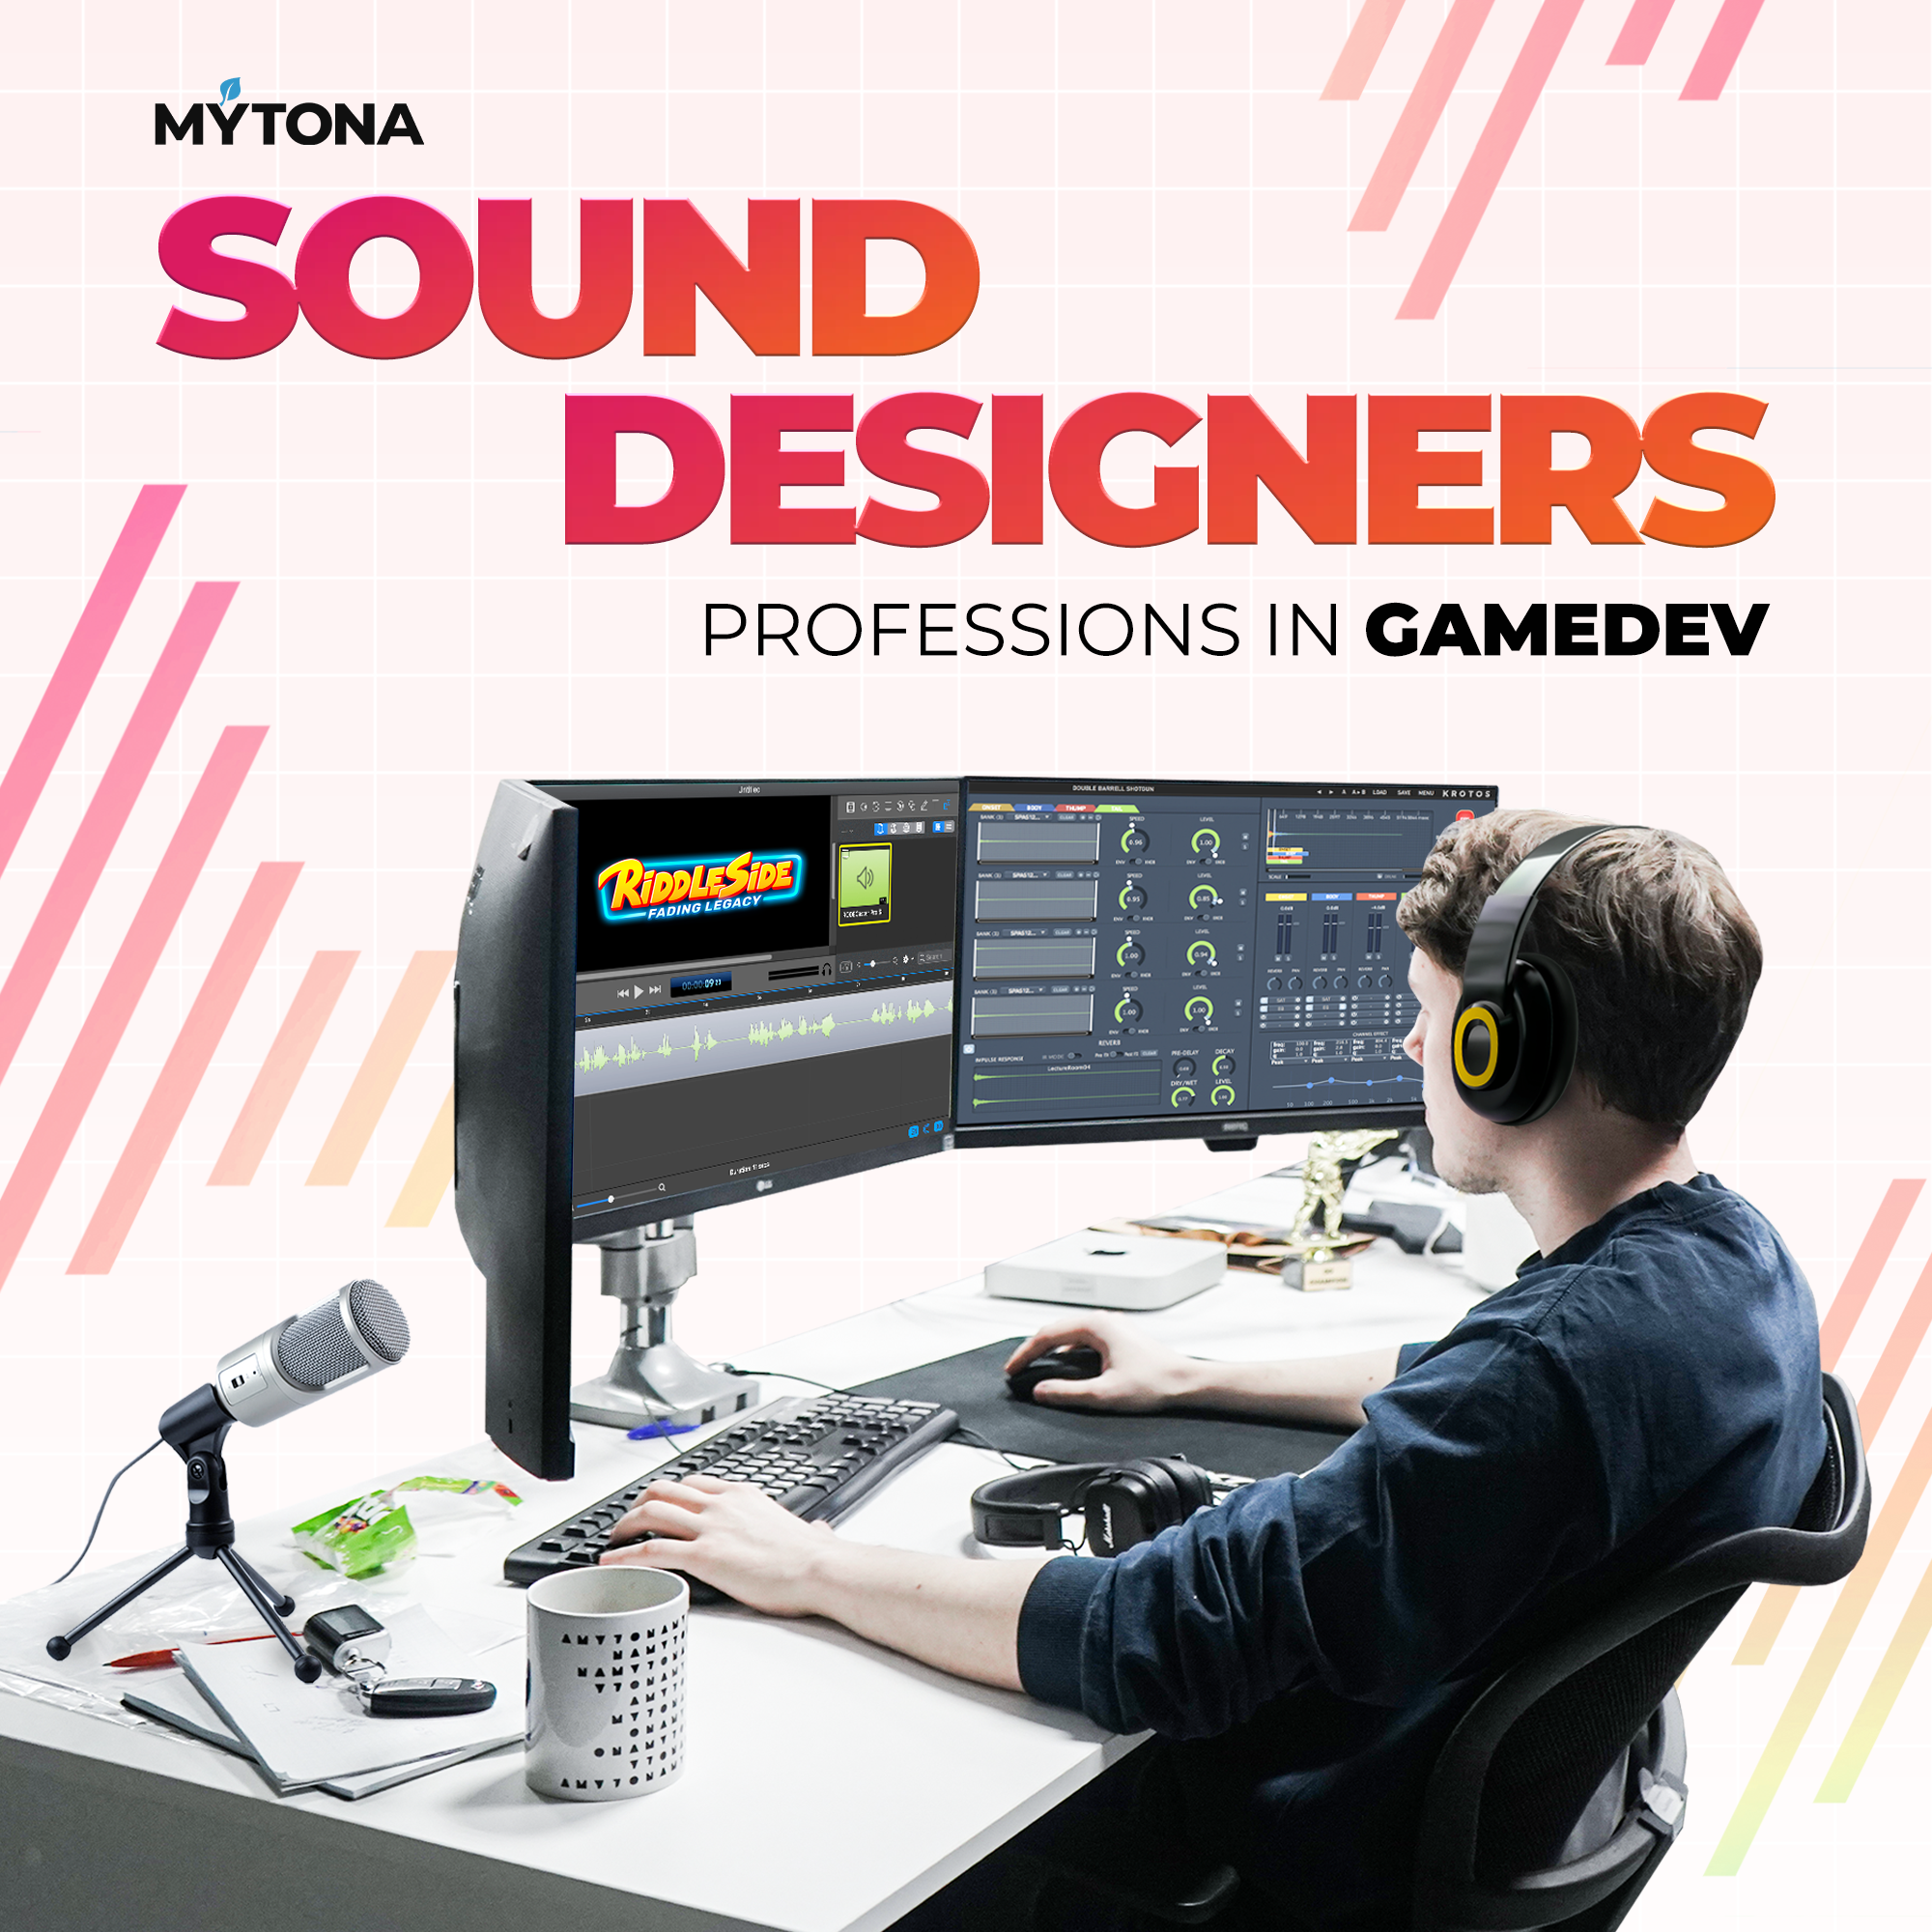 PROFESSIONS IN GAMEDEV: Sound designer